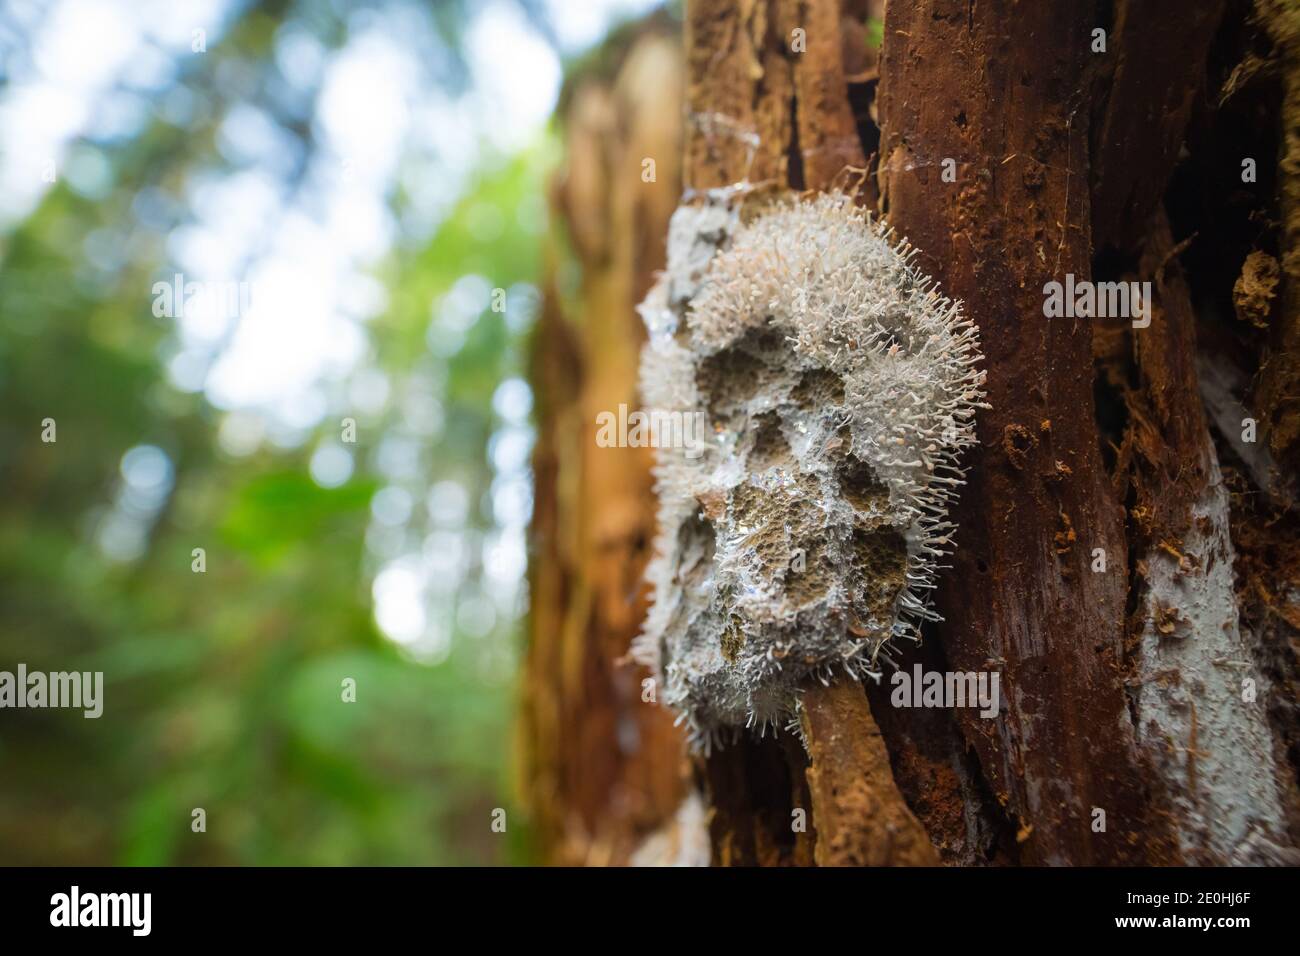 Mycoparasite (Polycephalomyces tomentosus) growing on a slime mould Stock Photo